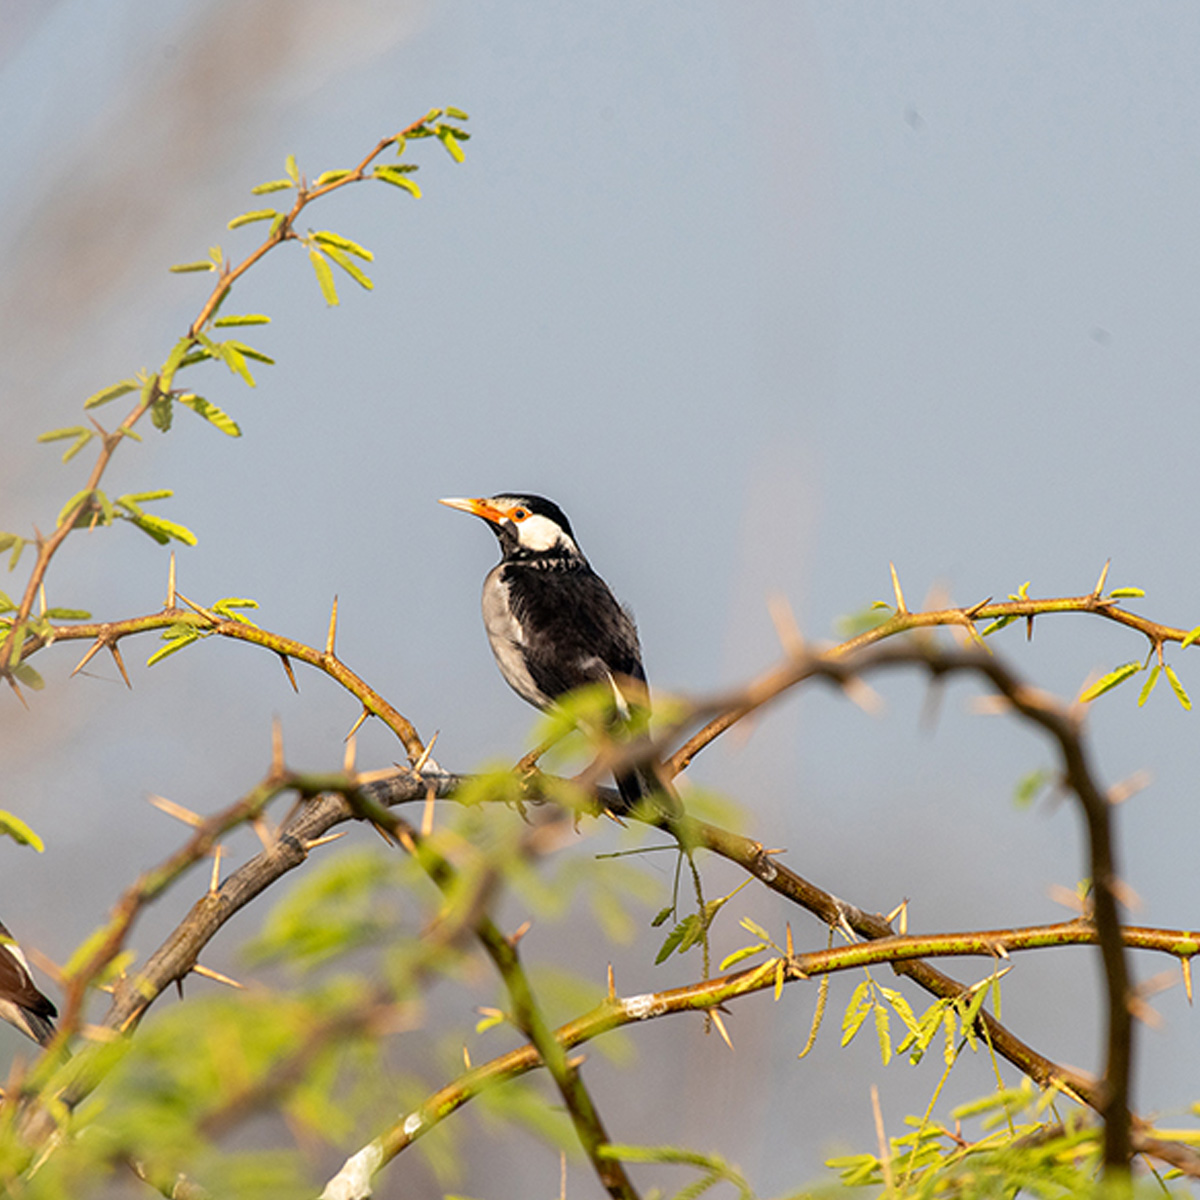 Chandlai & Barkheda Bird Watching Tour (Winters only)